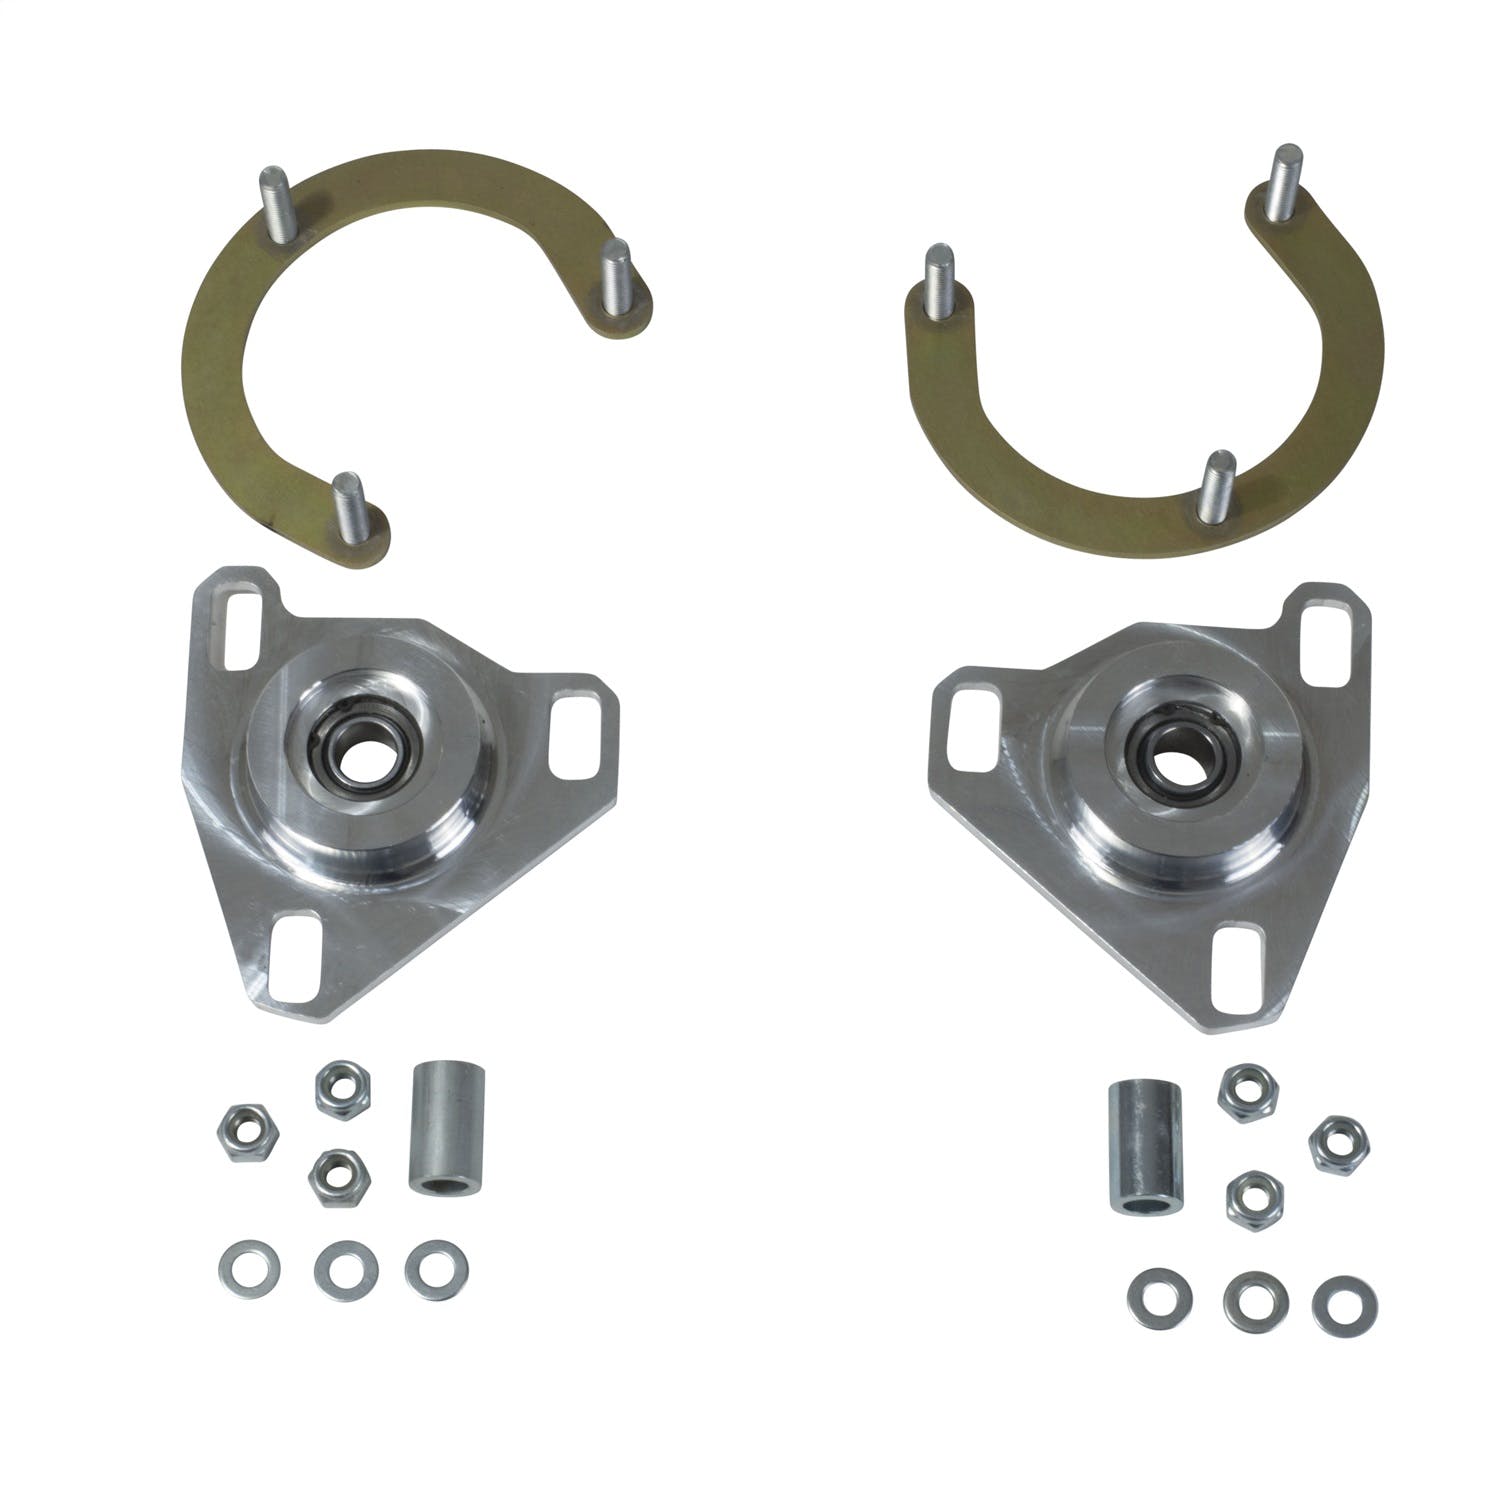 BBK Performance Parts 2553 Caster/Camber Adjustment Plate Kit